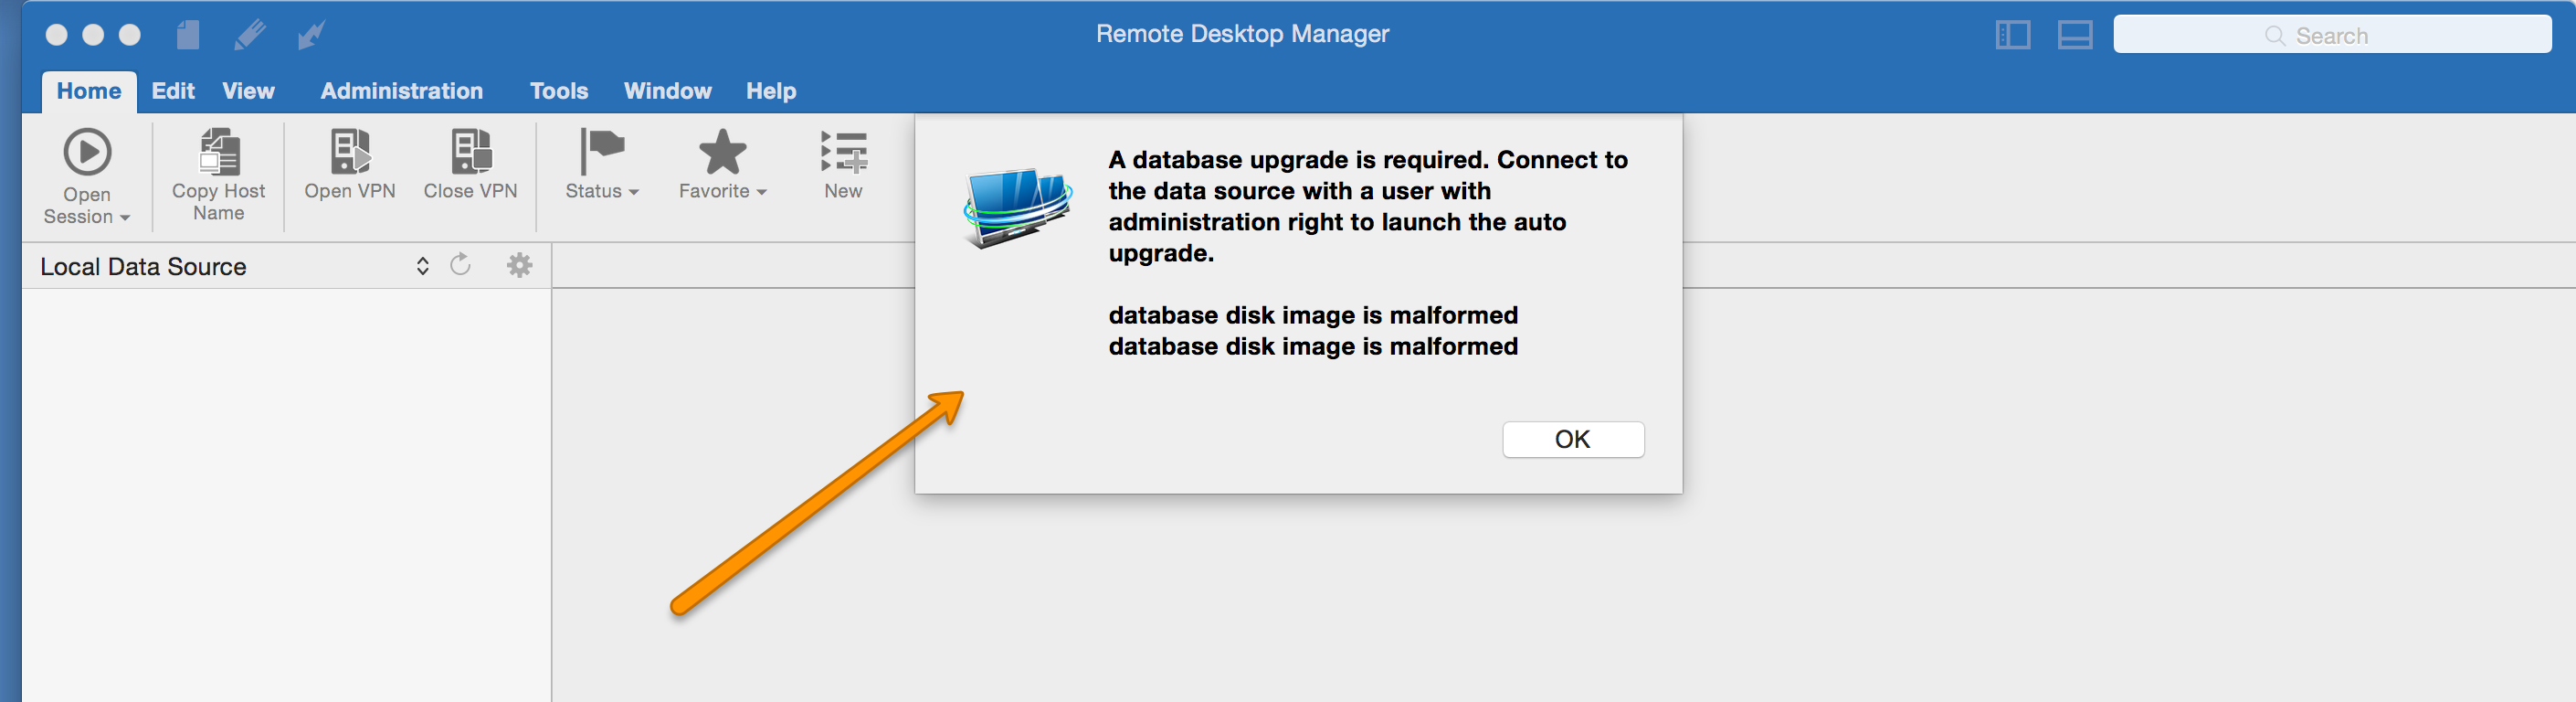 apple remote desktop functions not working